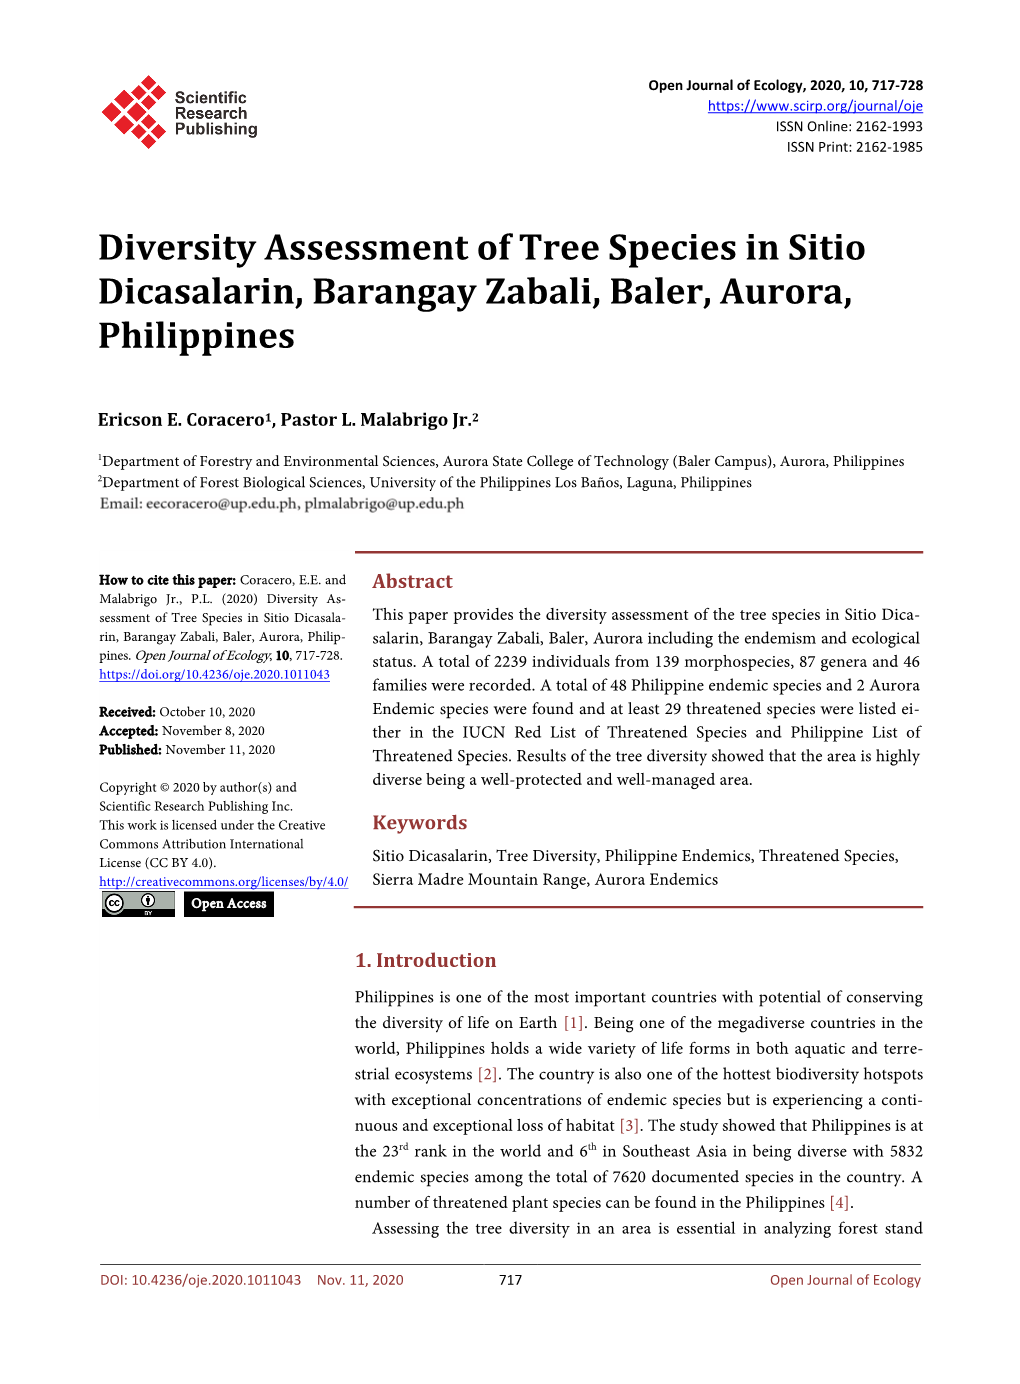 Diversity Assessment of Tree Species in Sitio Dicasalarin, Barangay Zabali, Baler, Aurora, Philippines